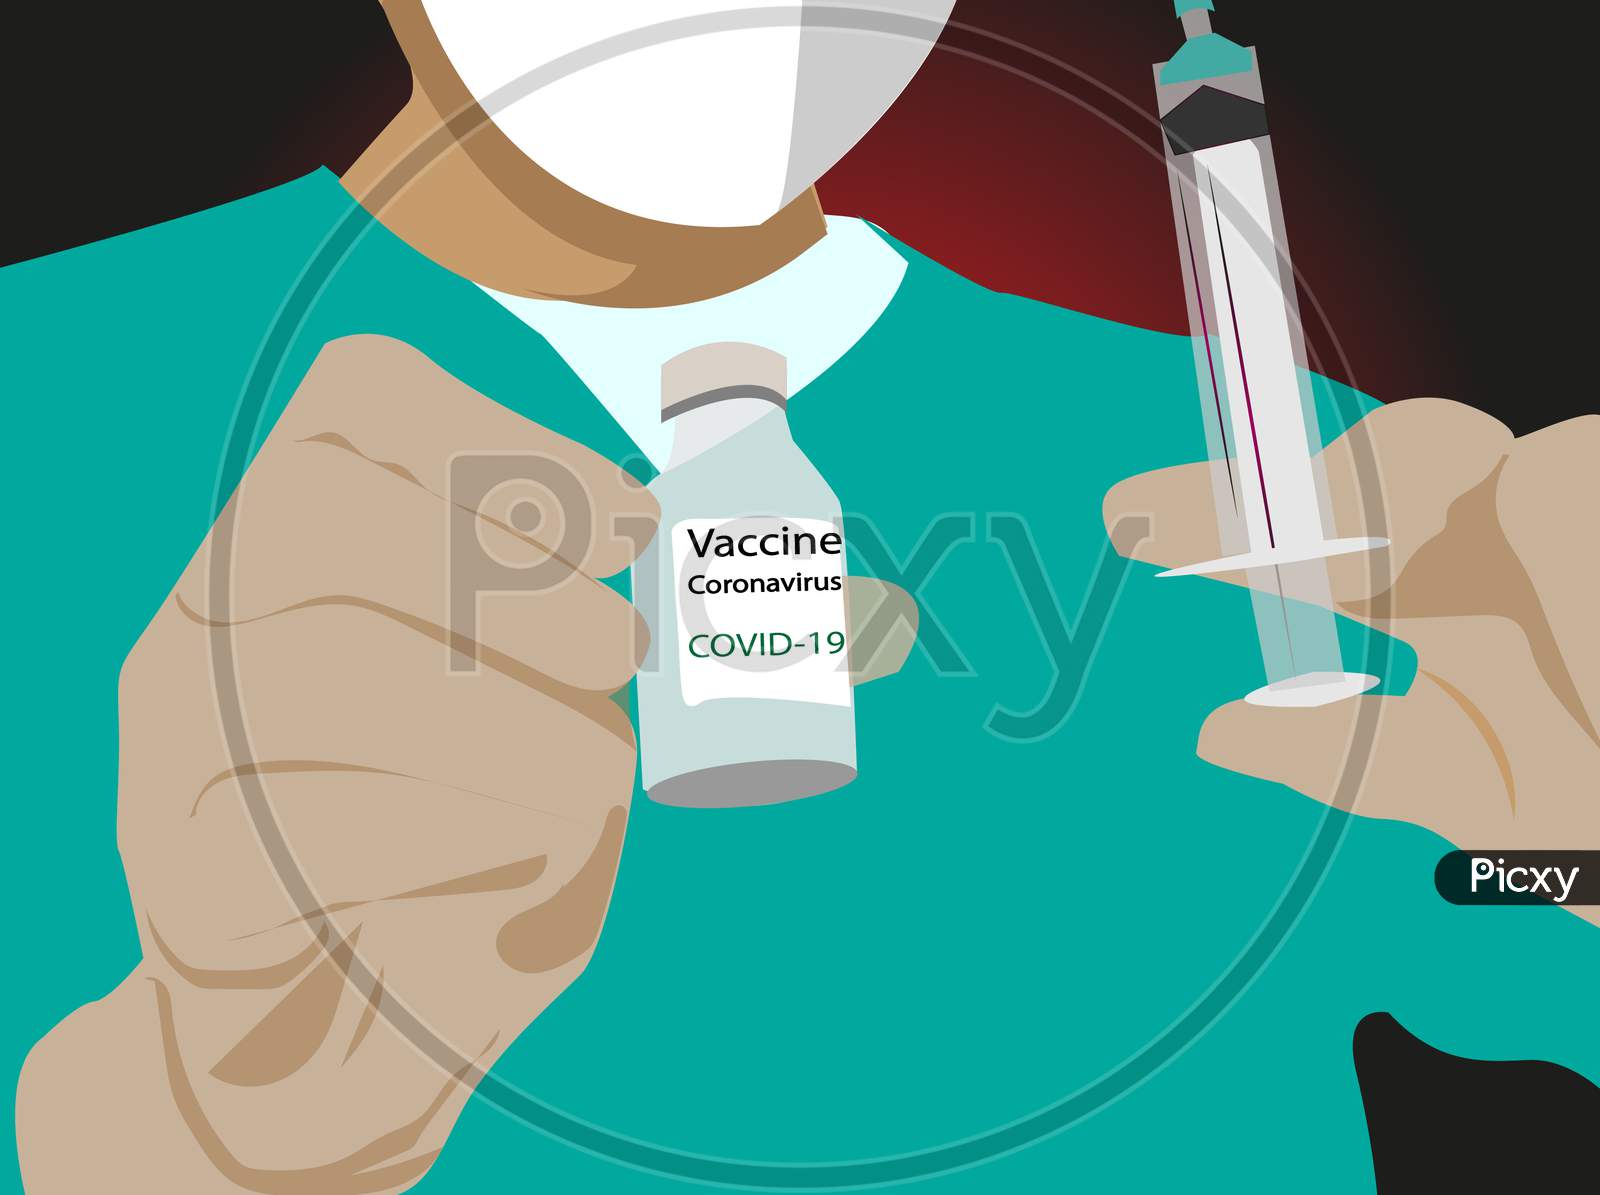 Coronavirus covid 19 vaccine bottle in hand wearing rubber glove